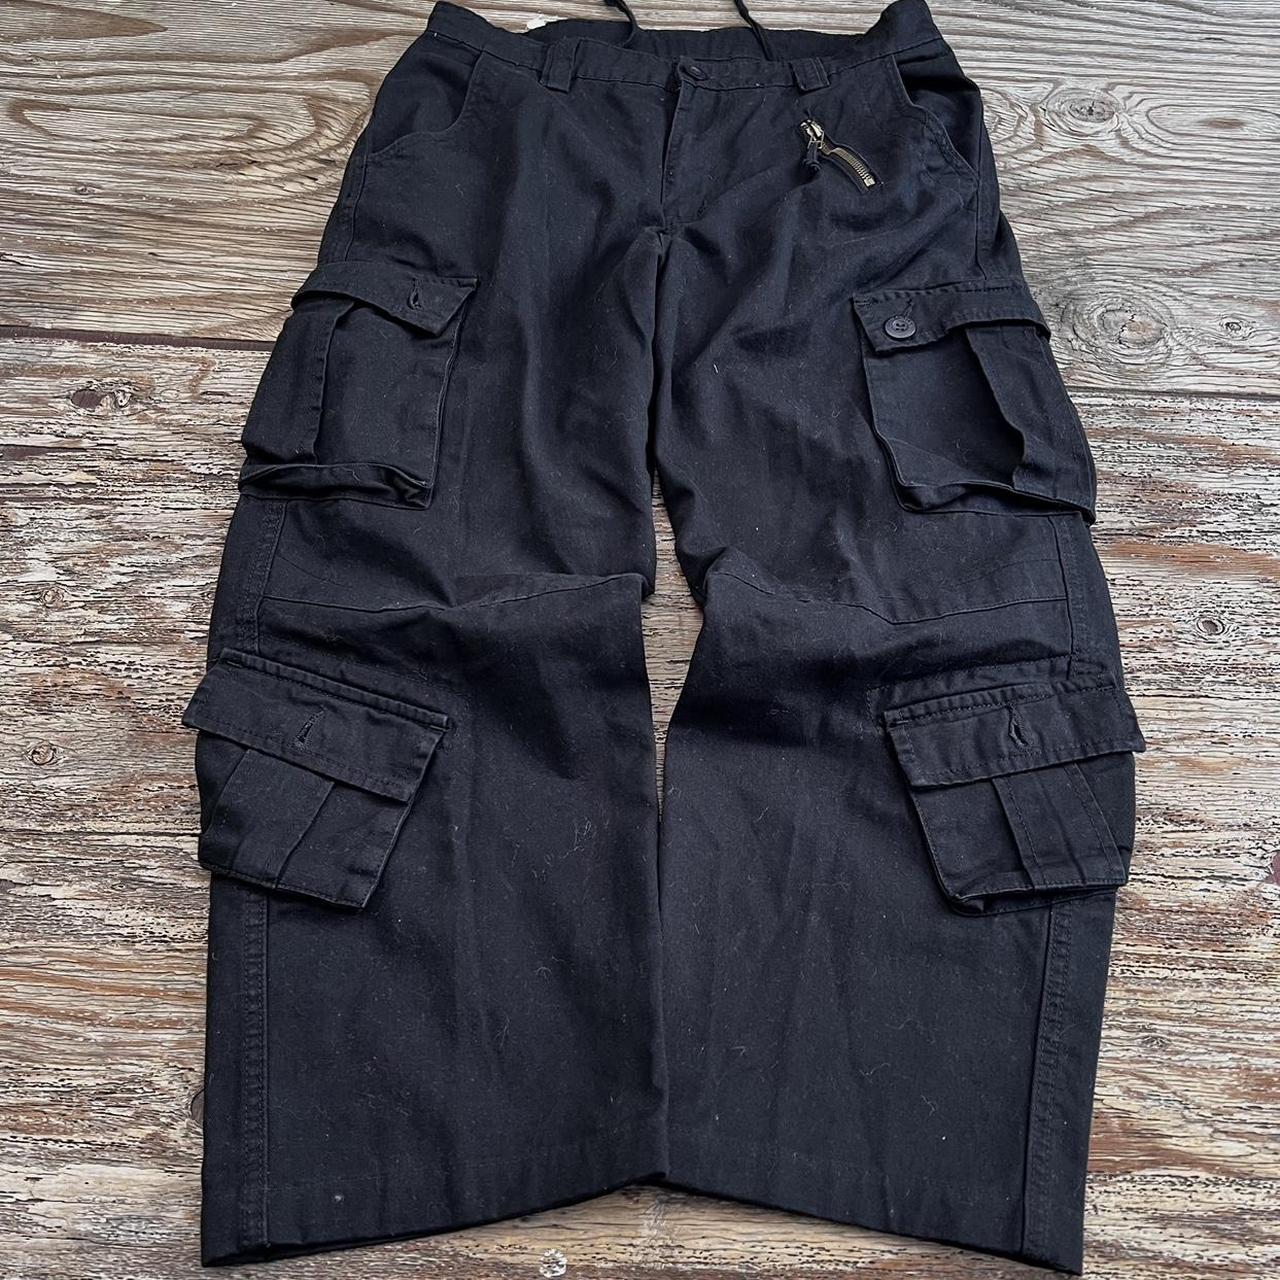 Cyber Grunge Y2k Cargo Pants Tagless fits 32 Waist... - Depop